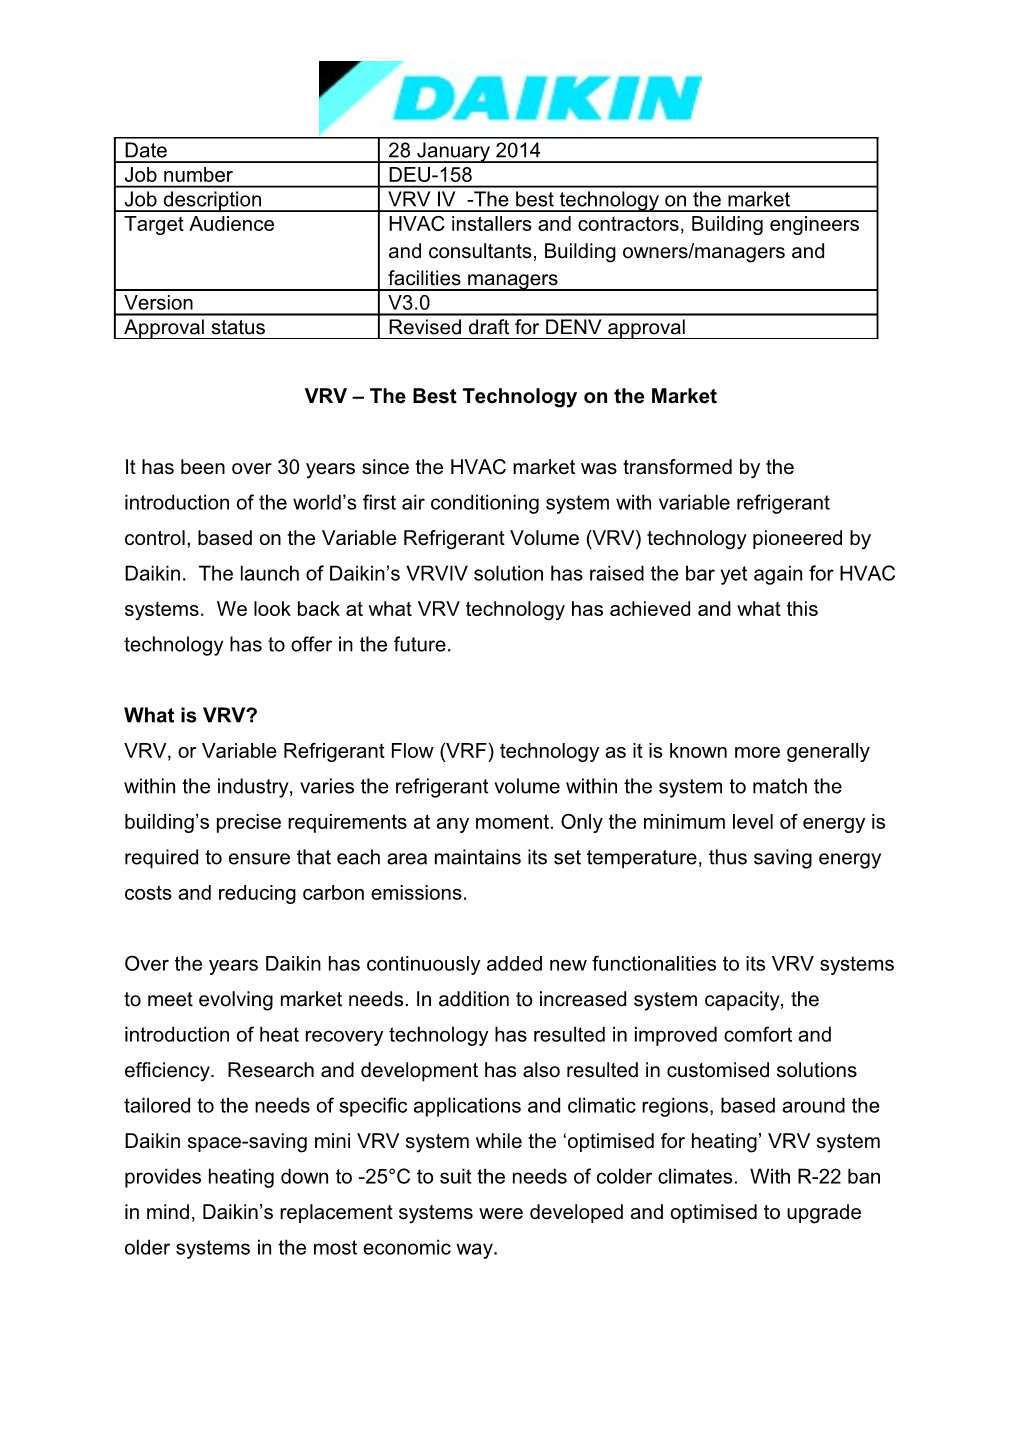 VRV the Best Technology on the Market